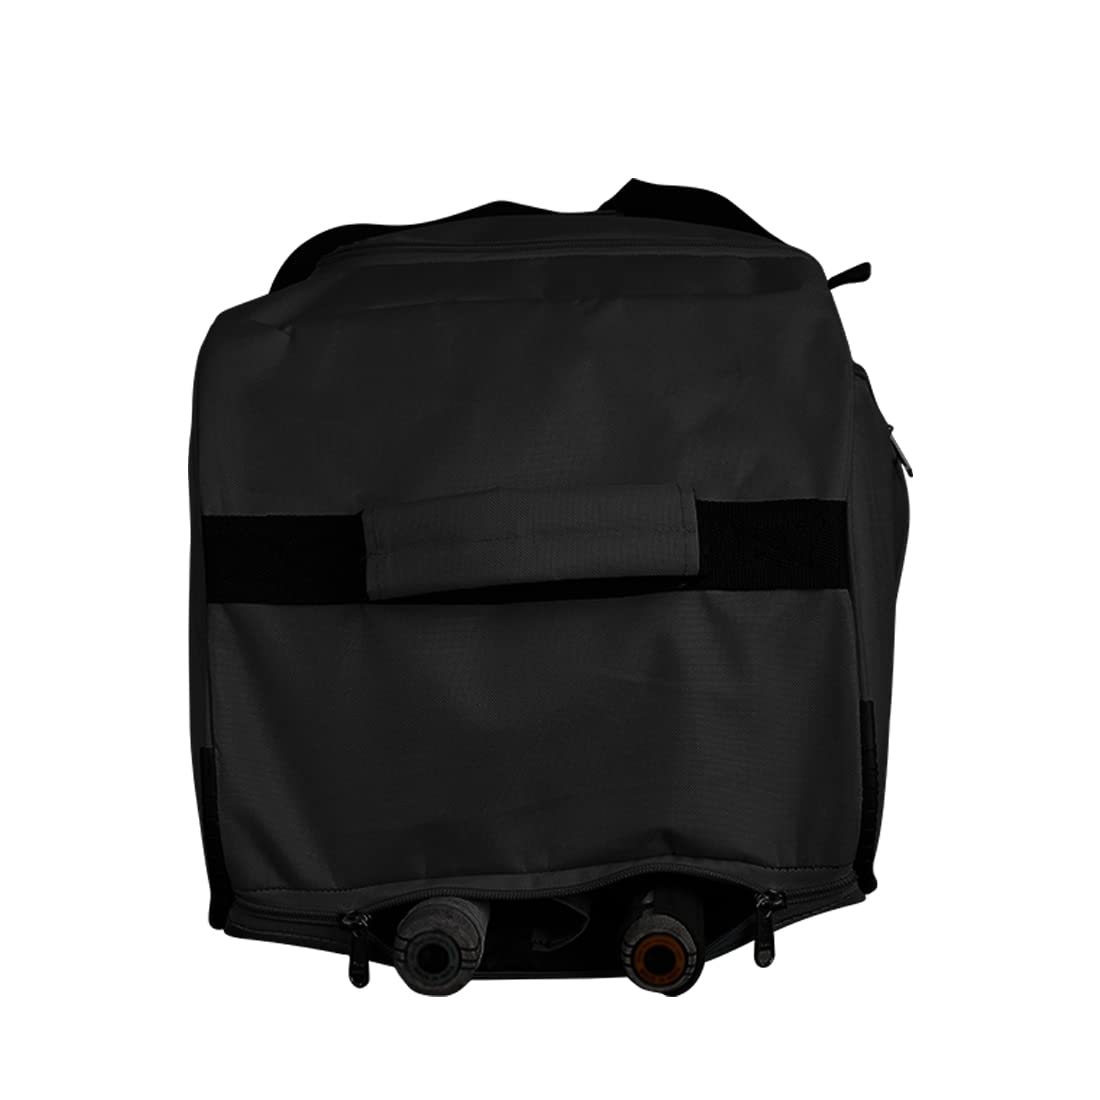 Shrey Kare Wheelie Bag Cricket Kitbag - Best Price online Prokicksports.com